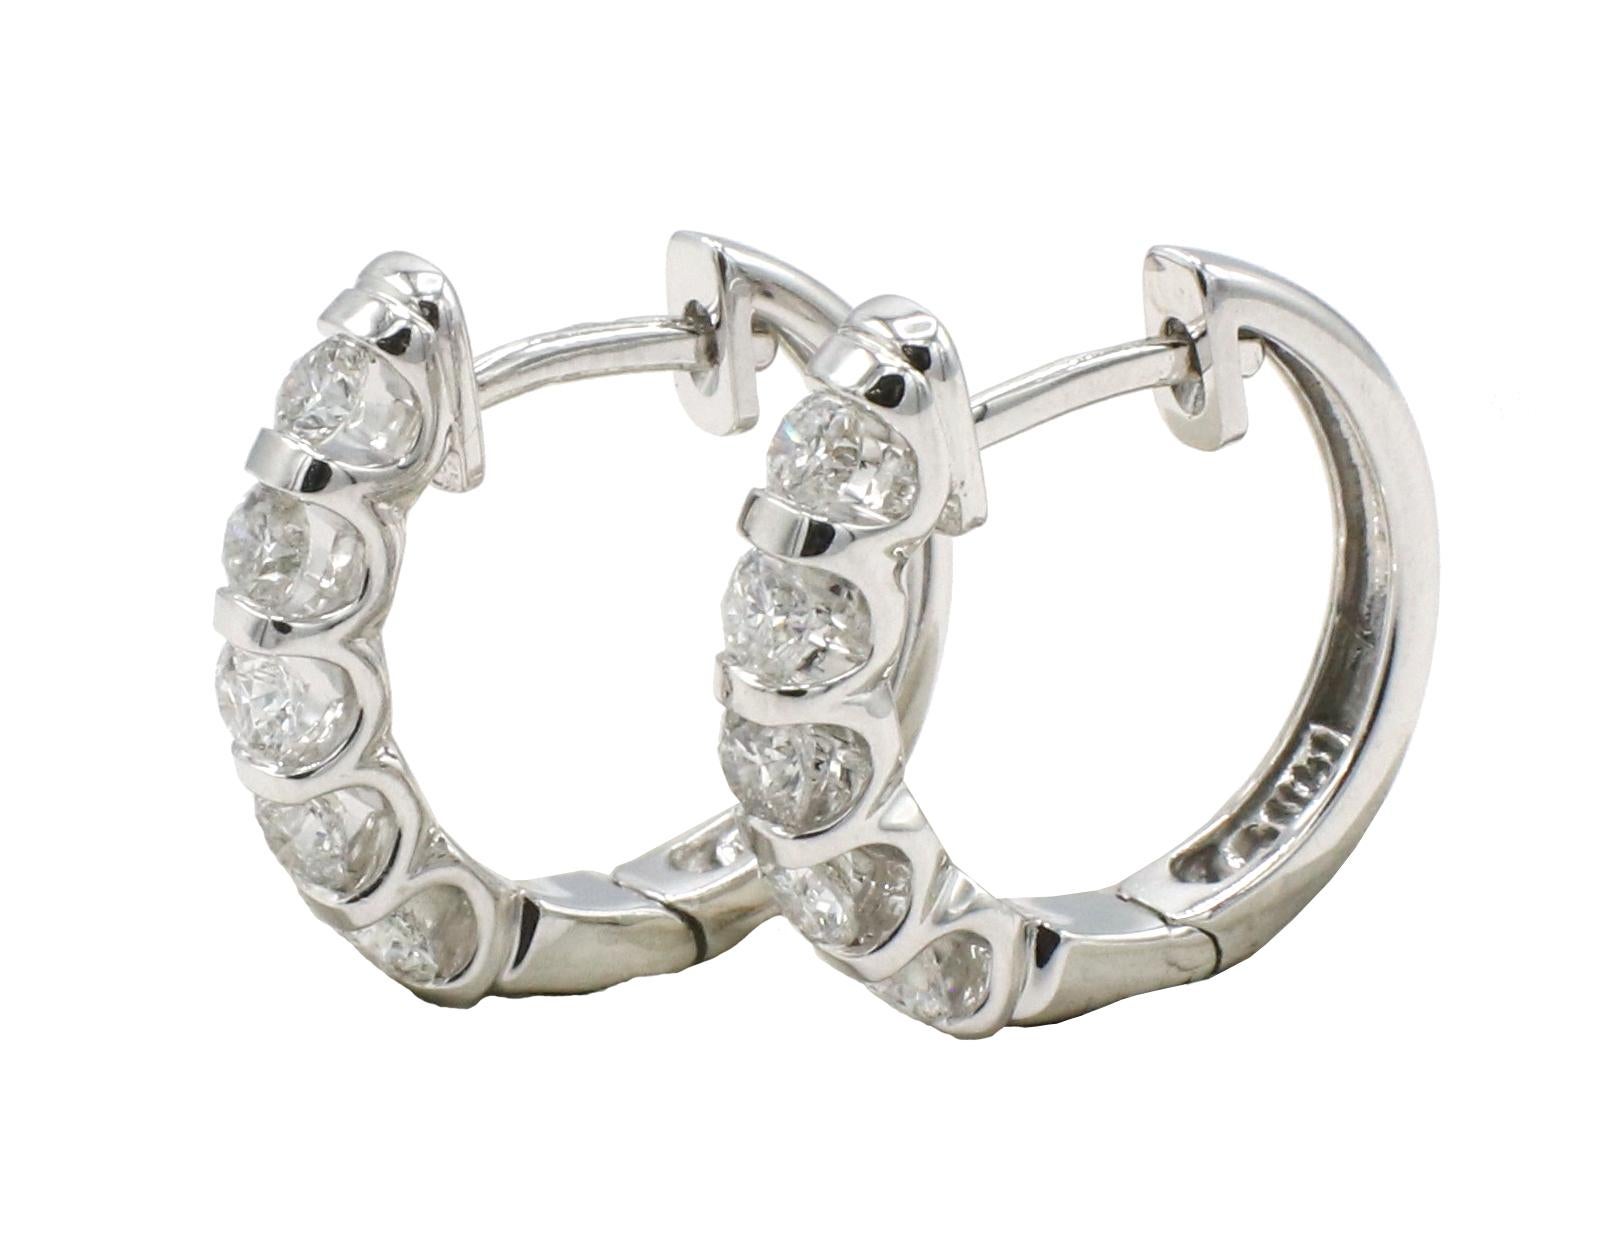 14 Karat White Gold 1.00 Carat Diamond Huggie Hoop Earrings 
Metal: 14k white gold
Weight: 5.5 grams
Diamonds: Approx. 1.00 CTW G-H VS round diamonds
Diameter: 18mm
Width: 3mm
Length: 17mm
